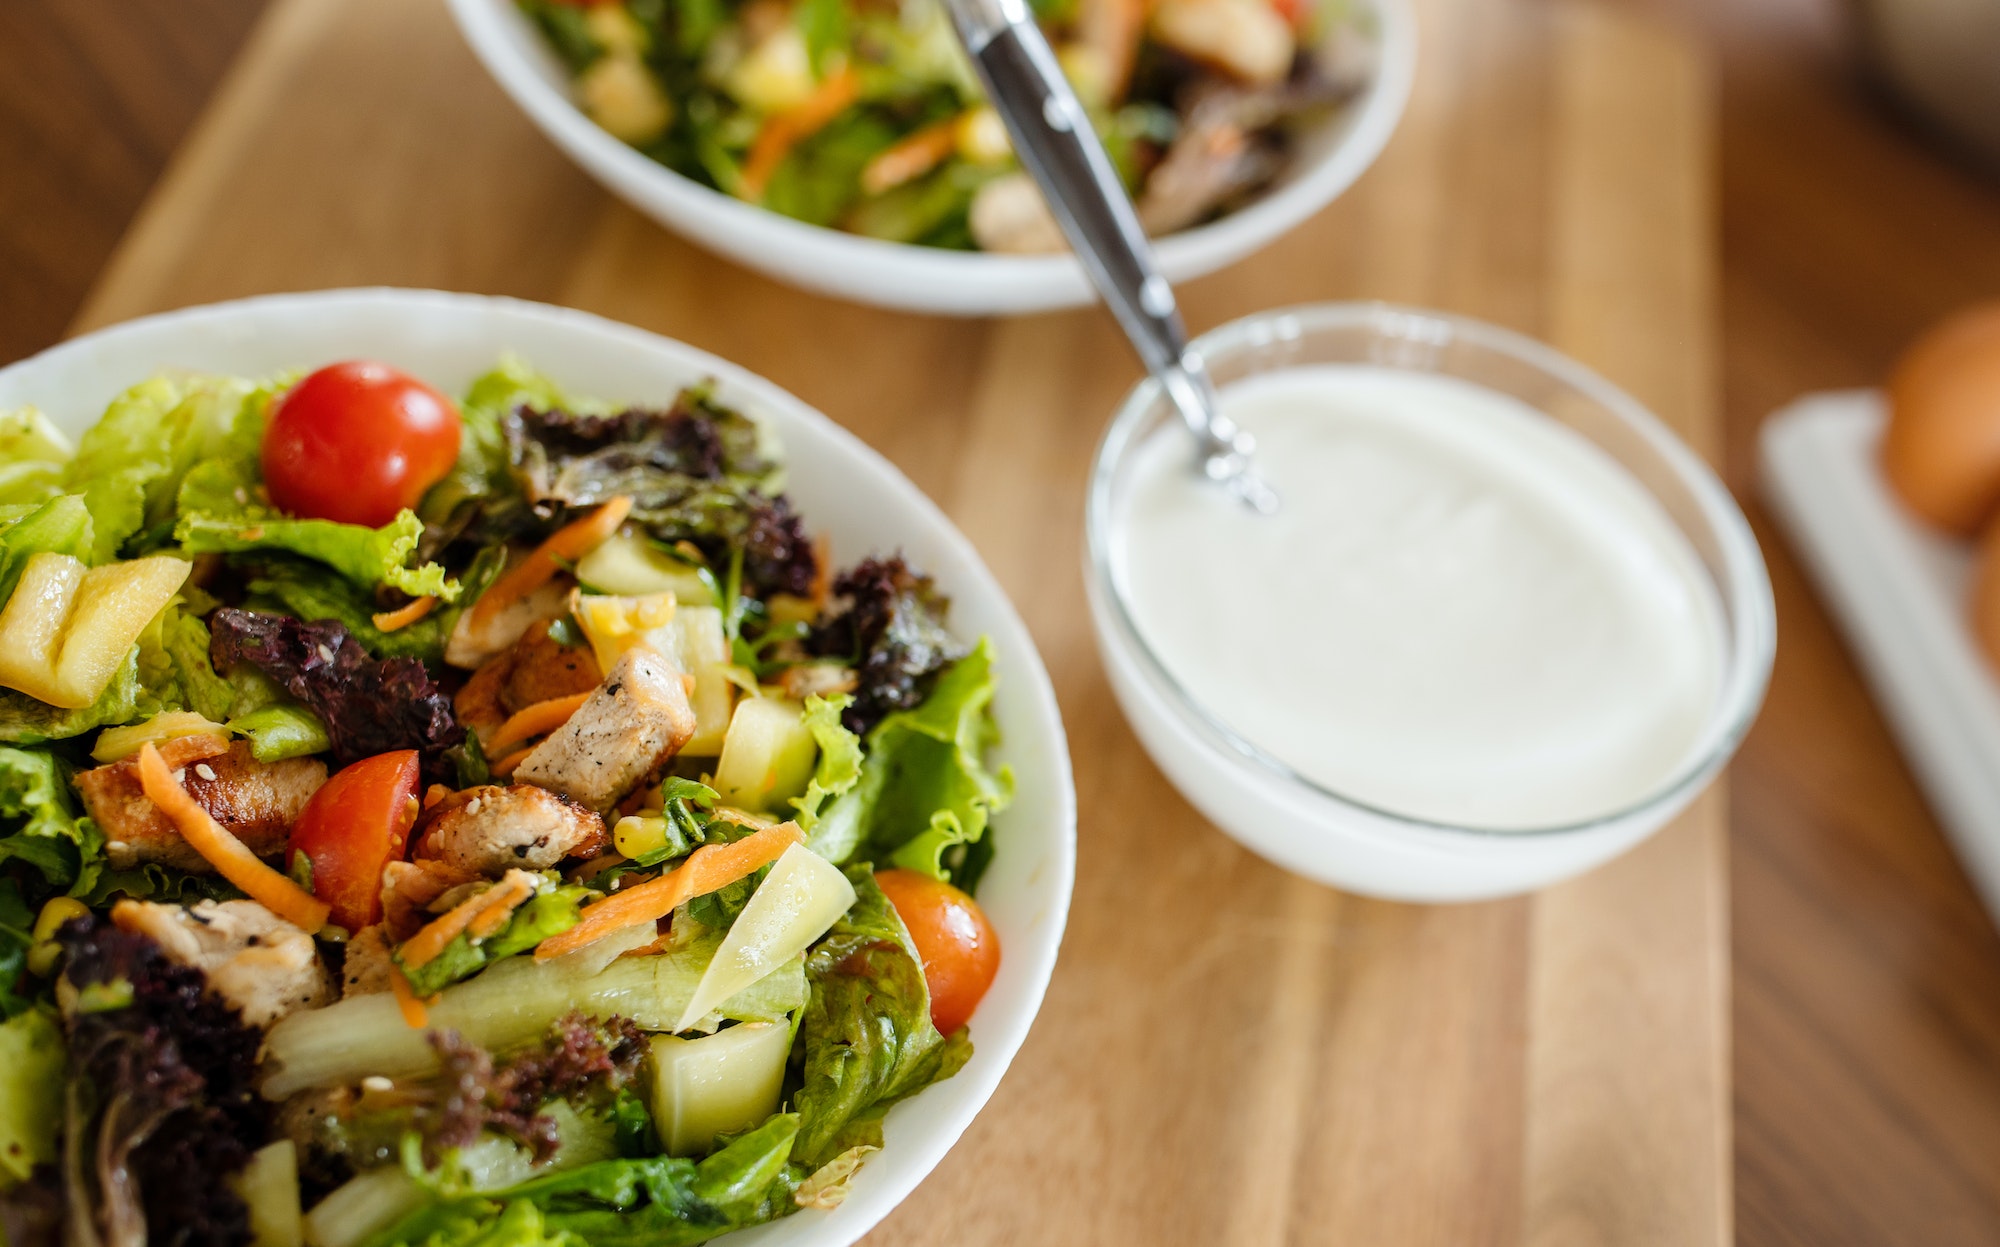 Chicken caesar salad with grilled chicken. Healthy food concept